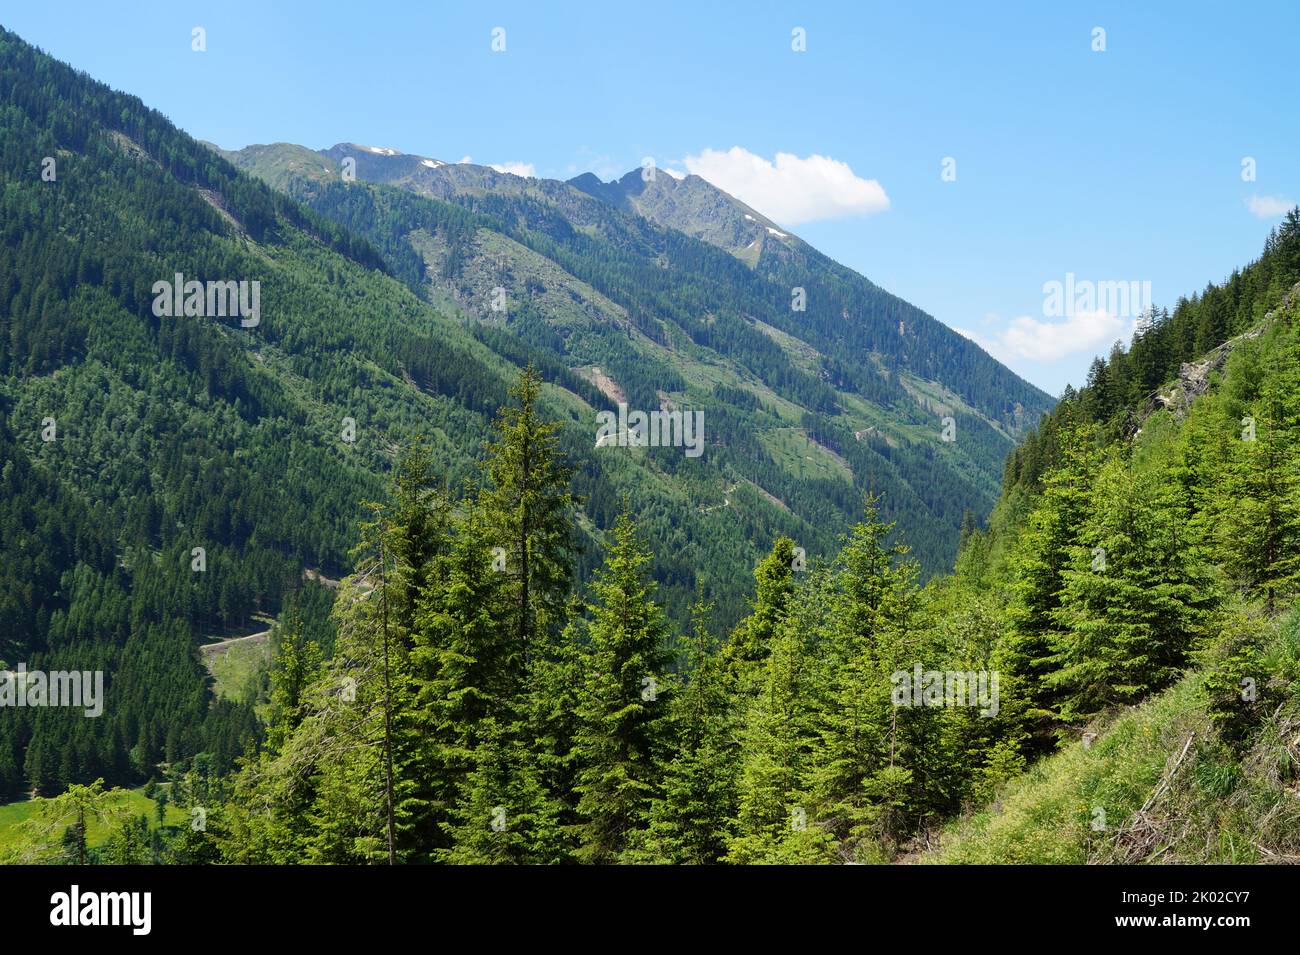 the picturesque lush green Austrian Alps of the Schladming-Dachstein region (Styria or Steiermark, in Austria) Stock Photo